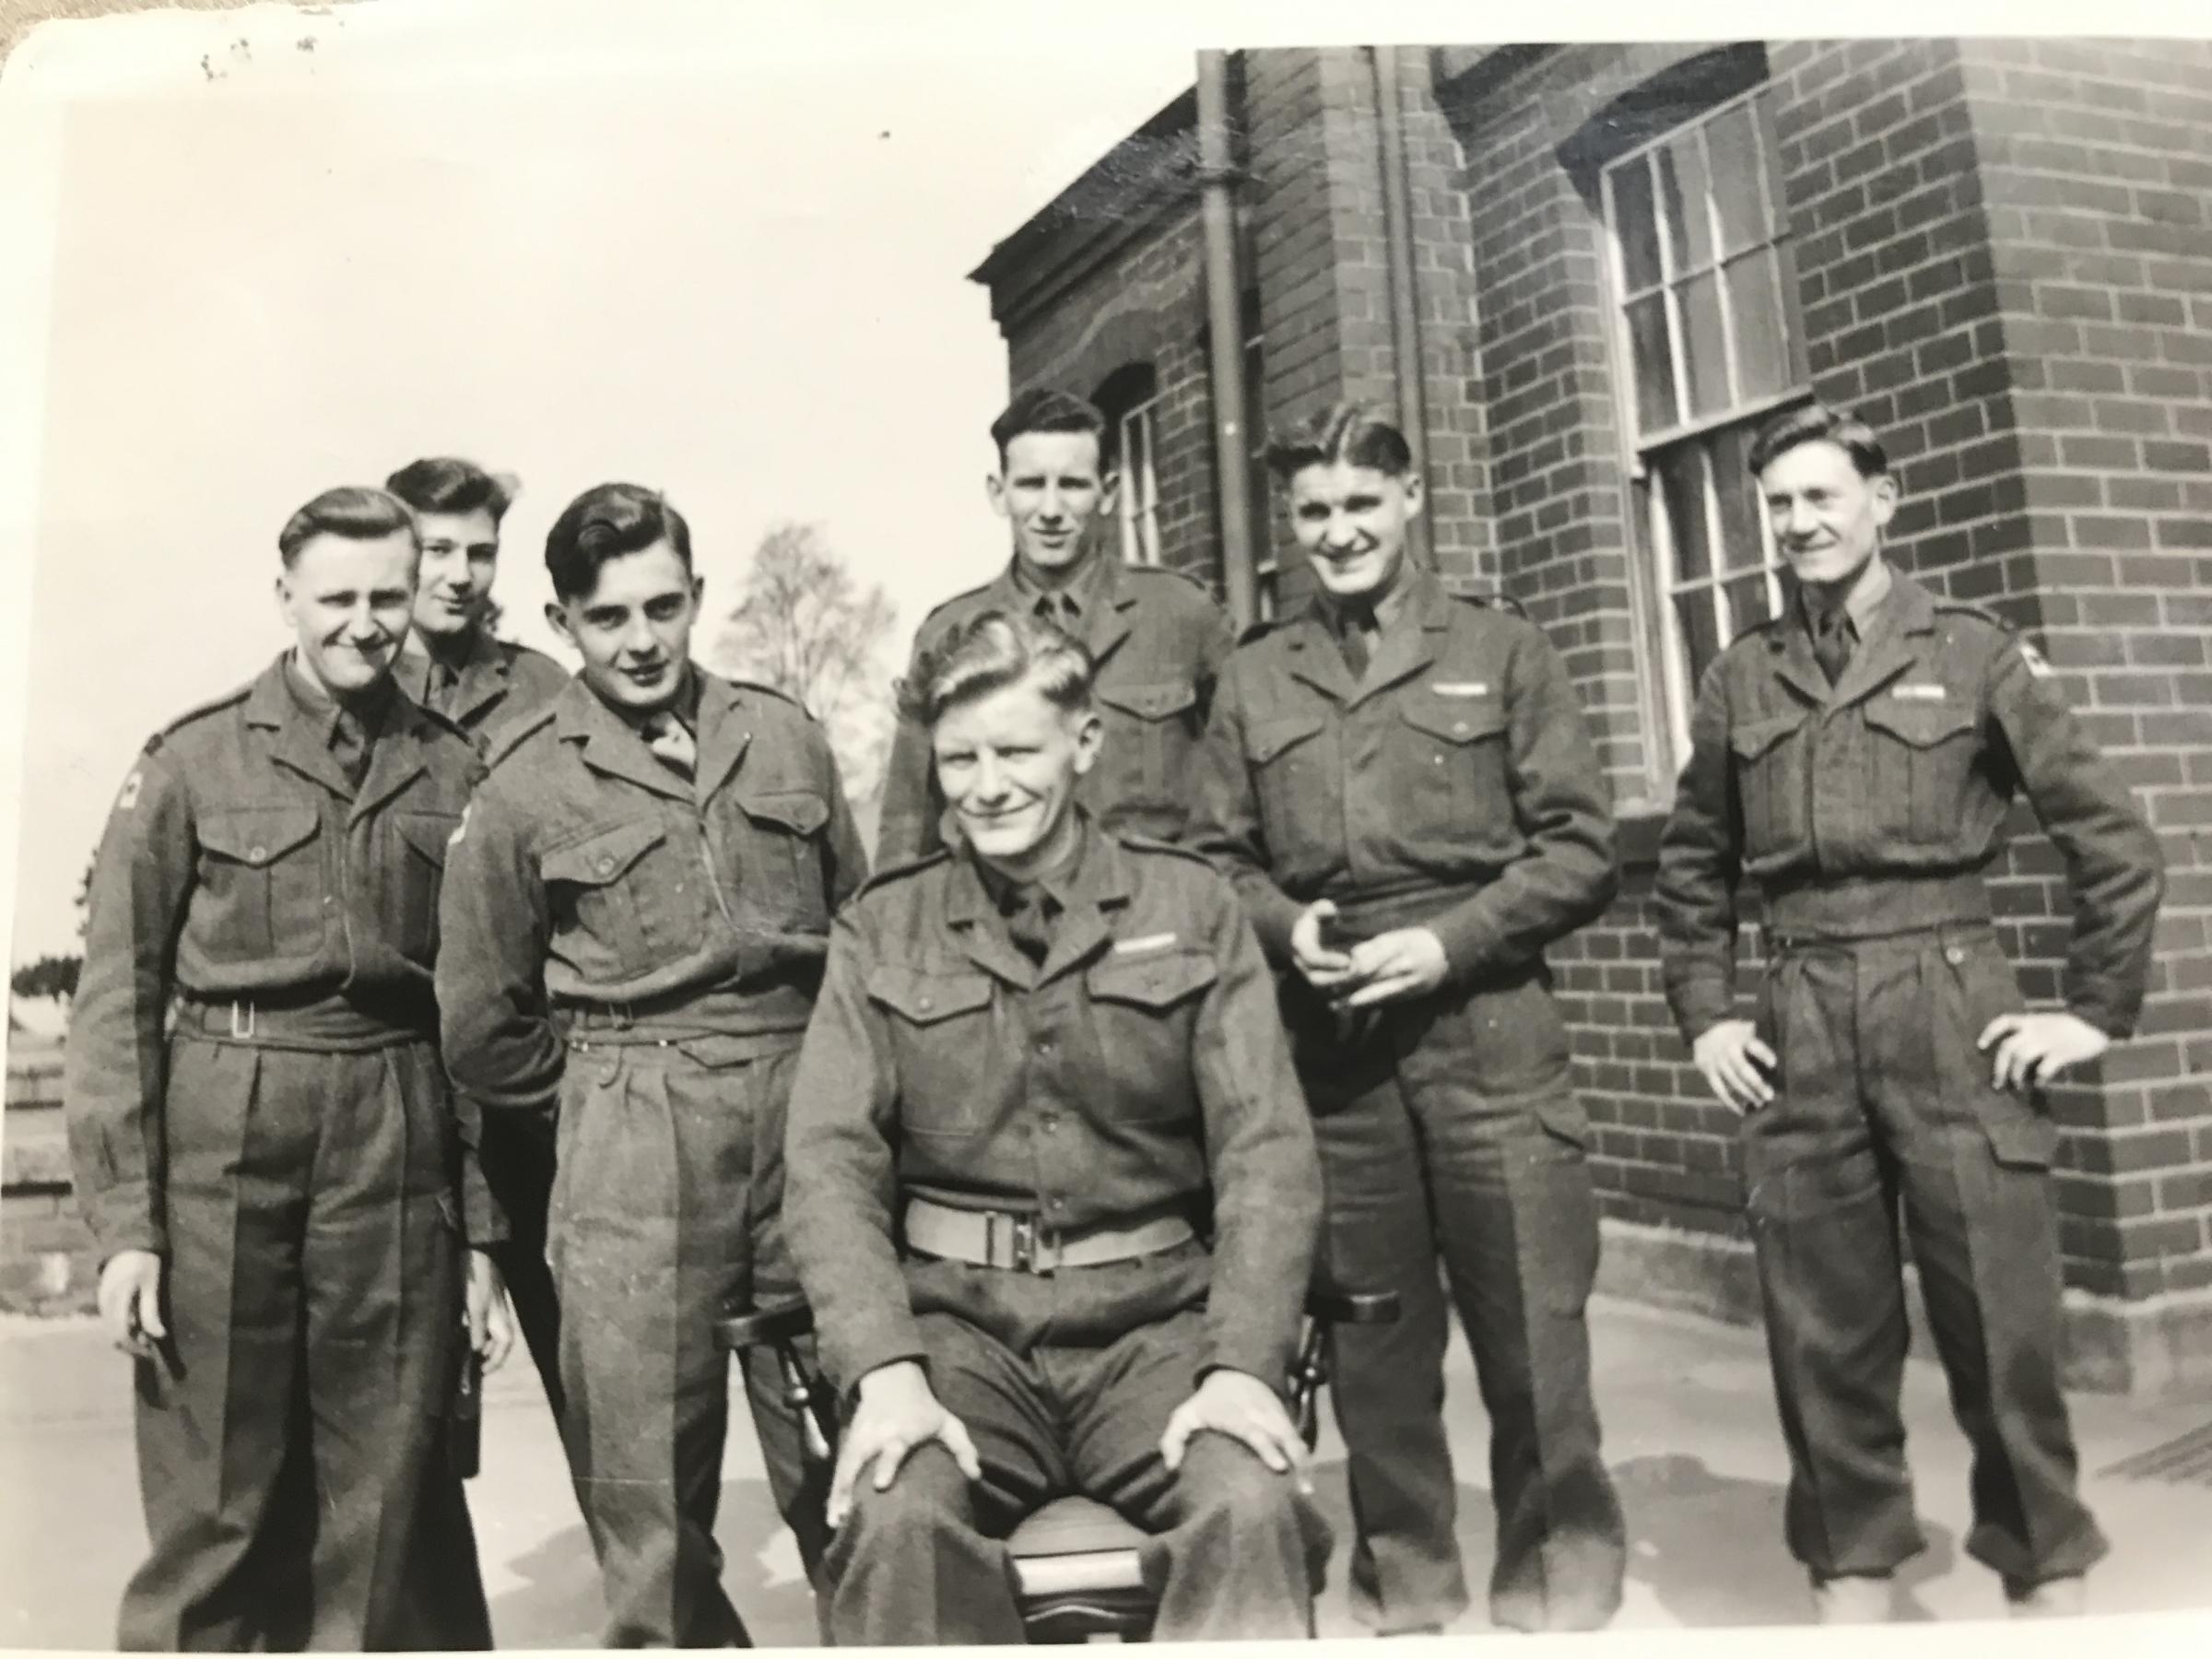 Jim Hammond, far right, in uniform 